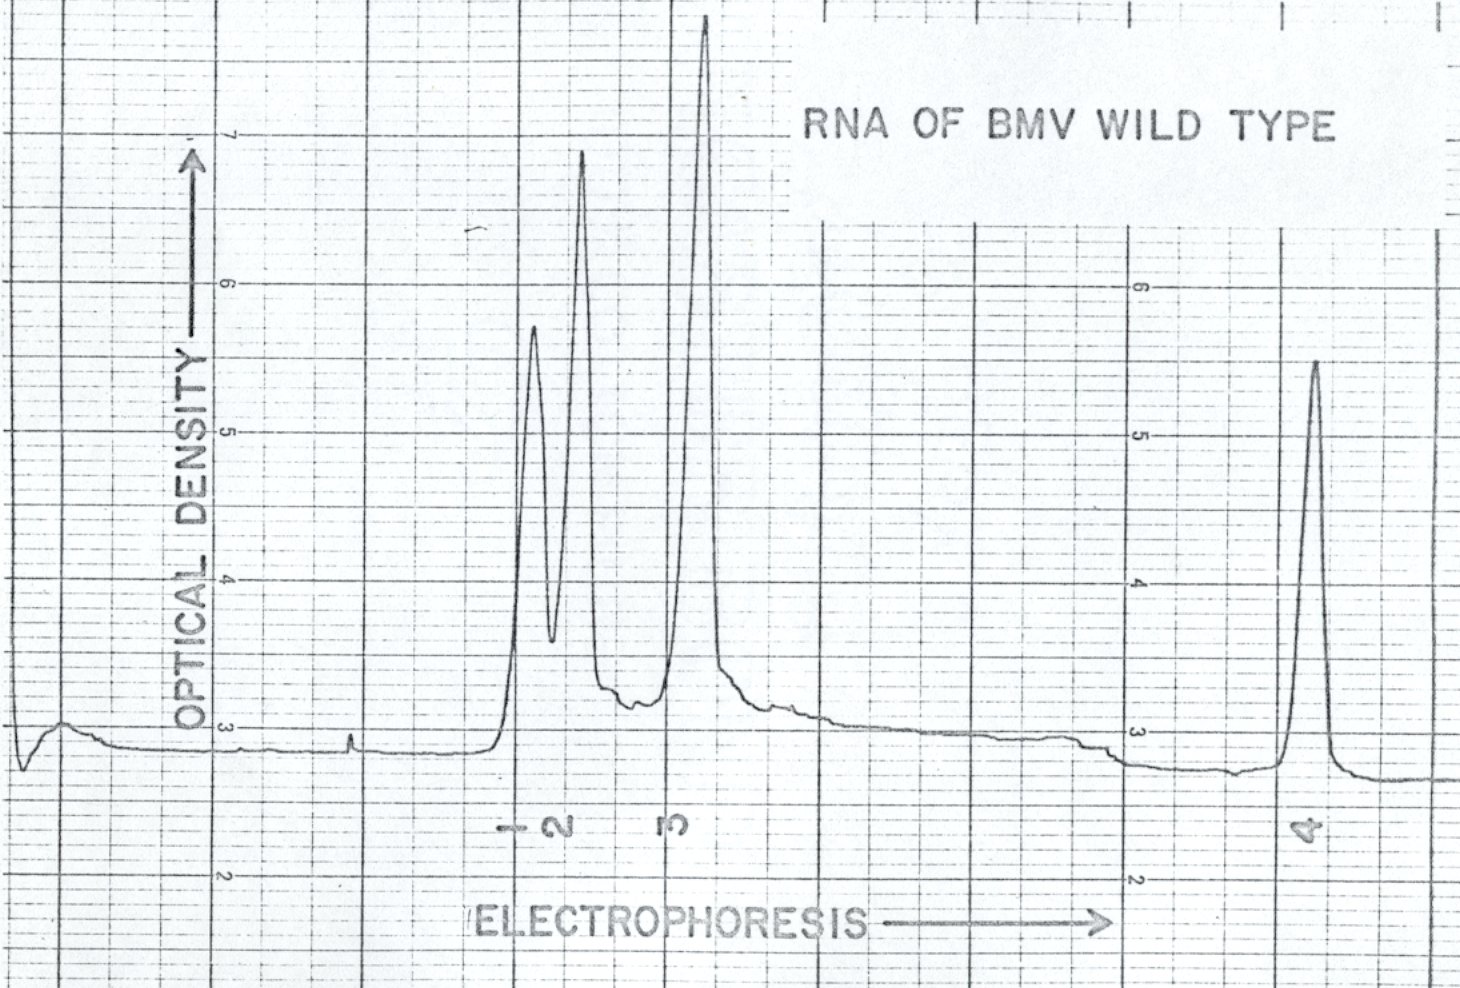 Gel electrophoresis of BMV RNA